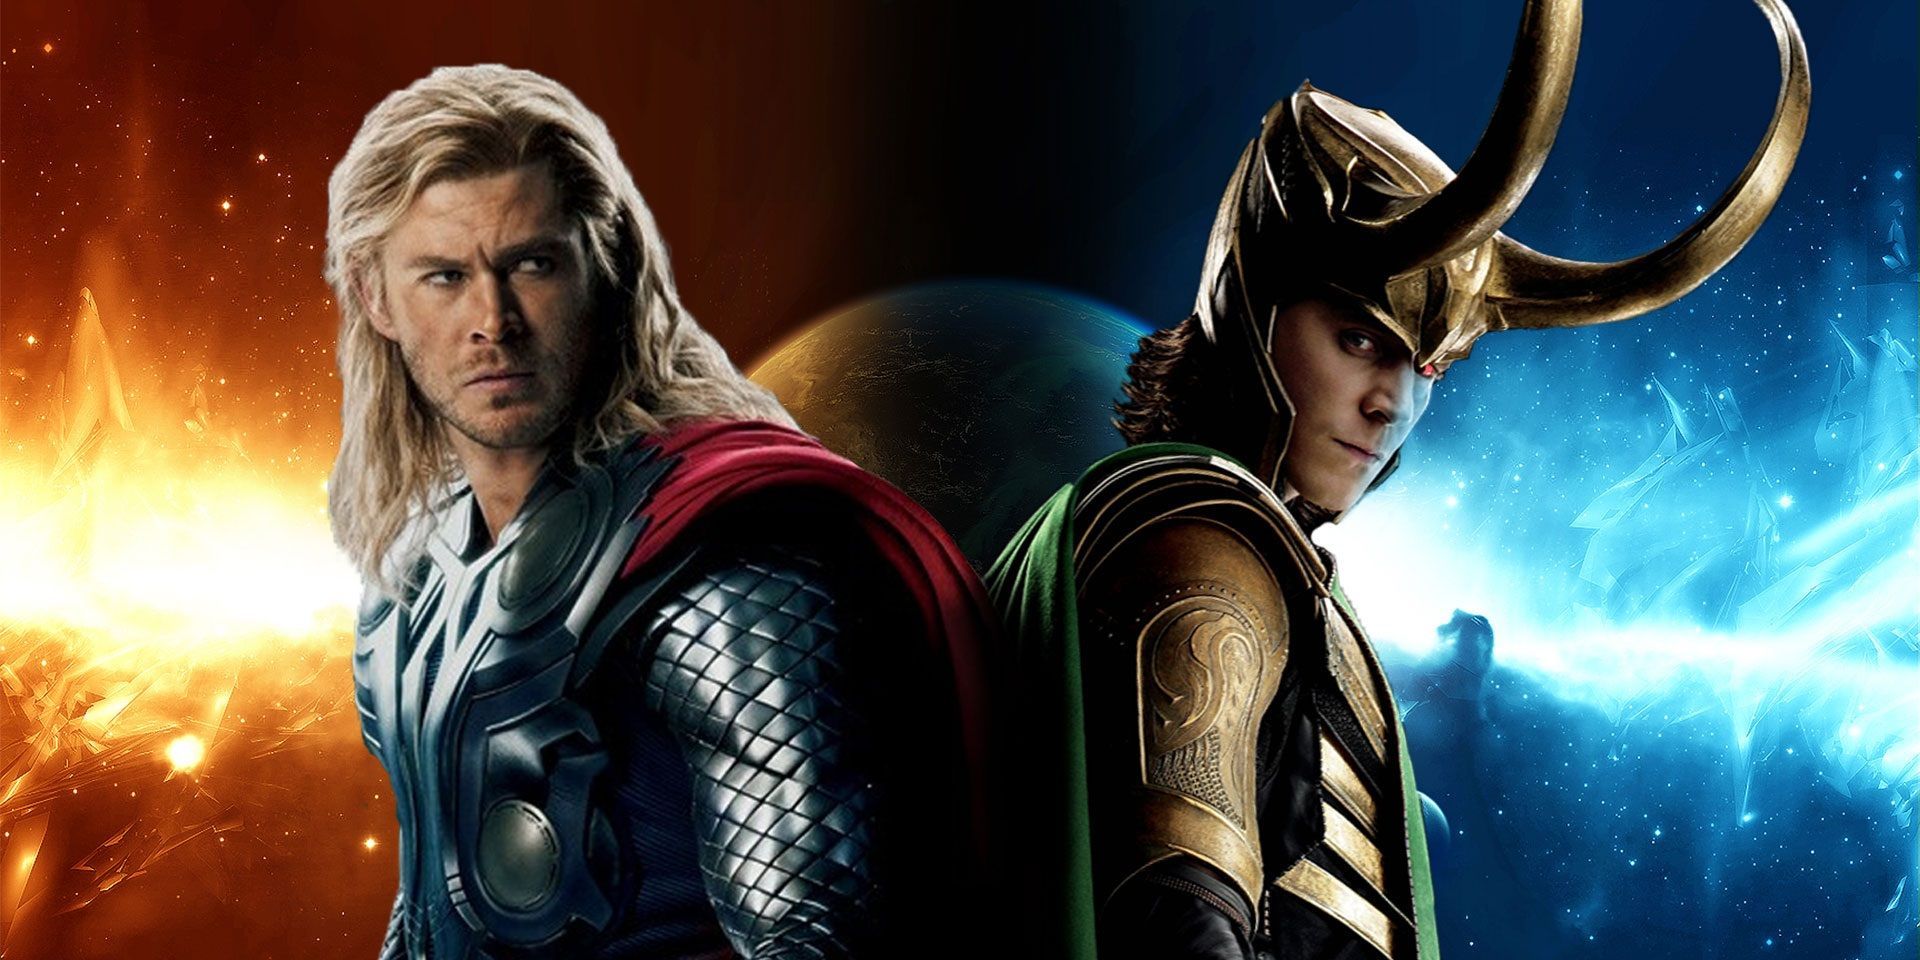 Chris Hemsworth as Thor and Tom Hiddleston as Loki - Best Superhero Rivalries